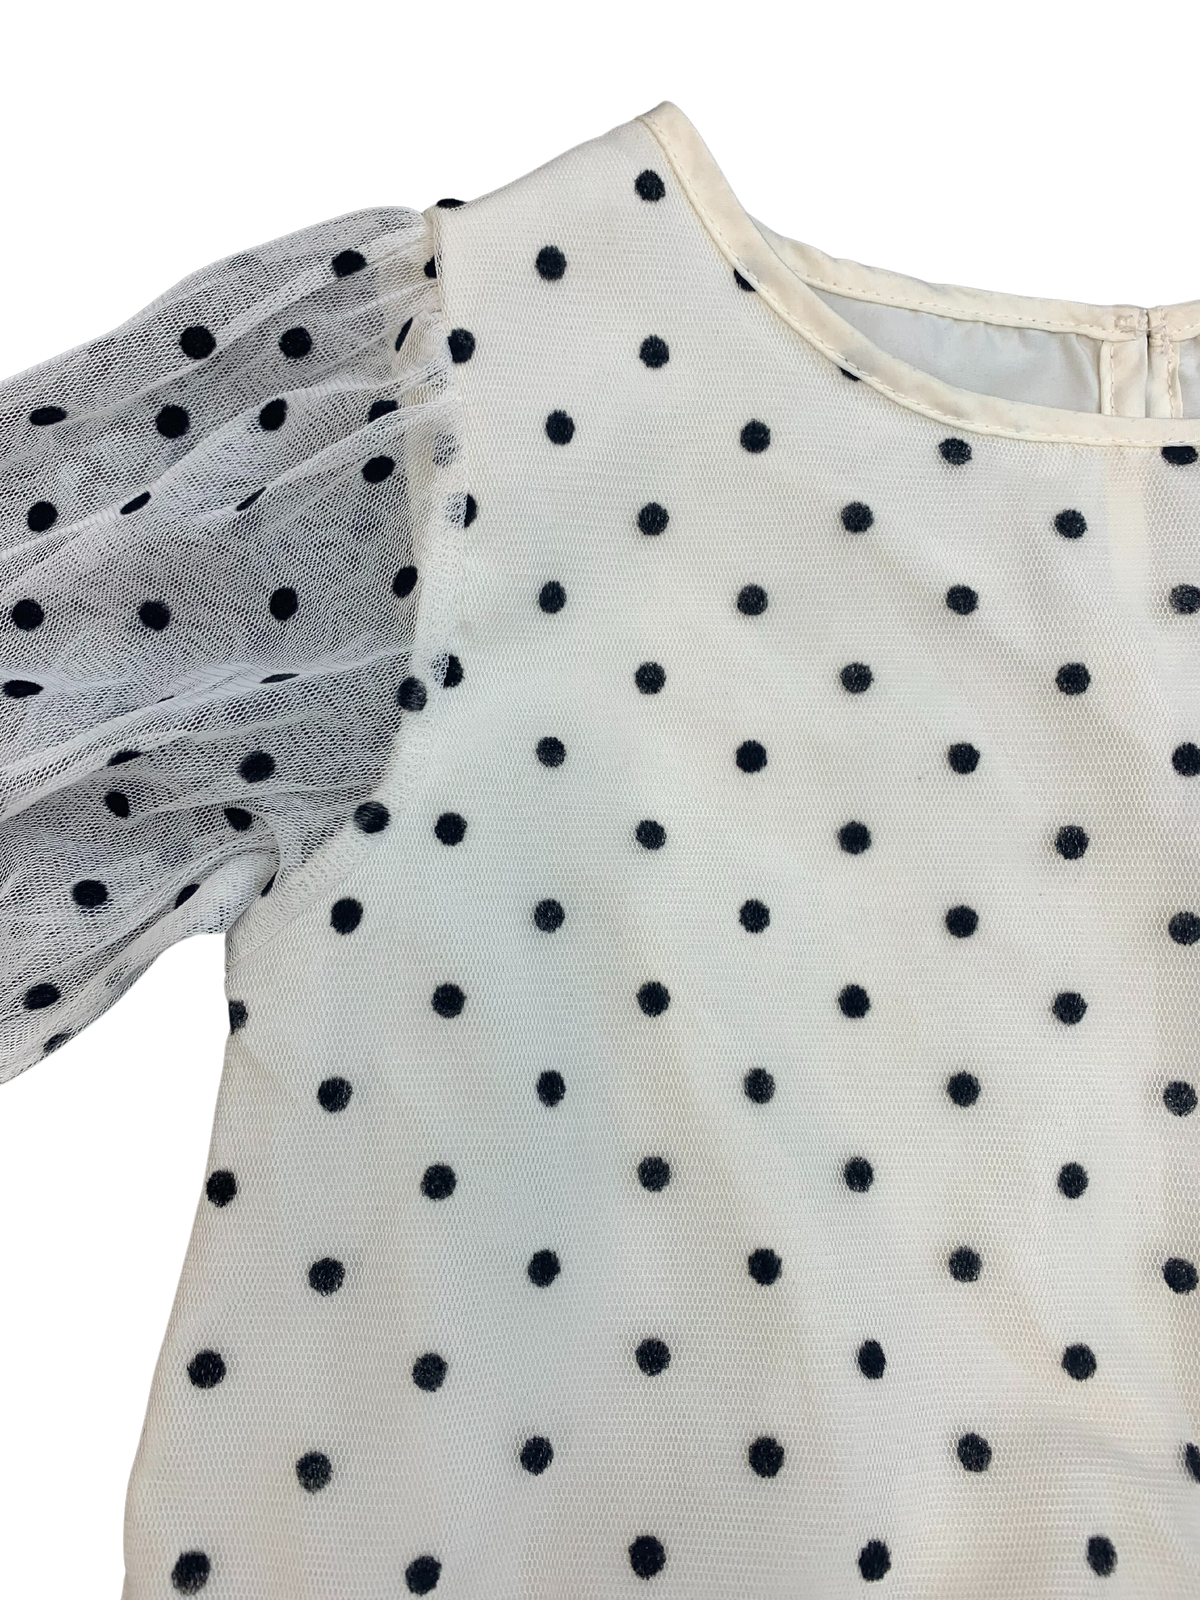 H&M Tiered Polka Dot Dress Girls 7-8 Years